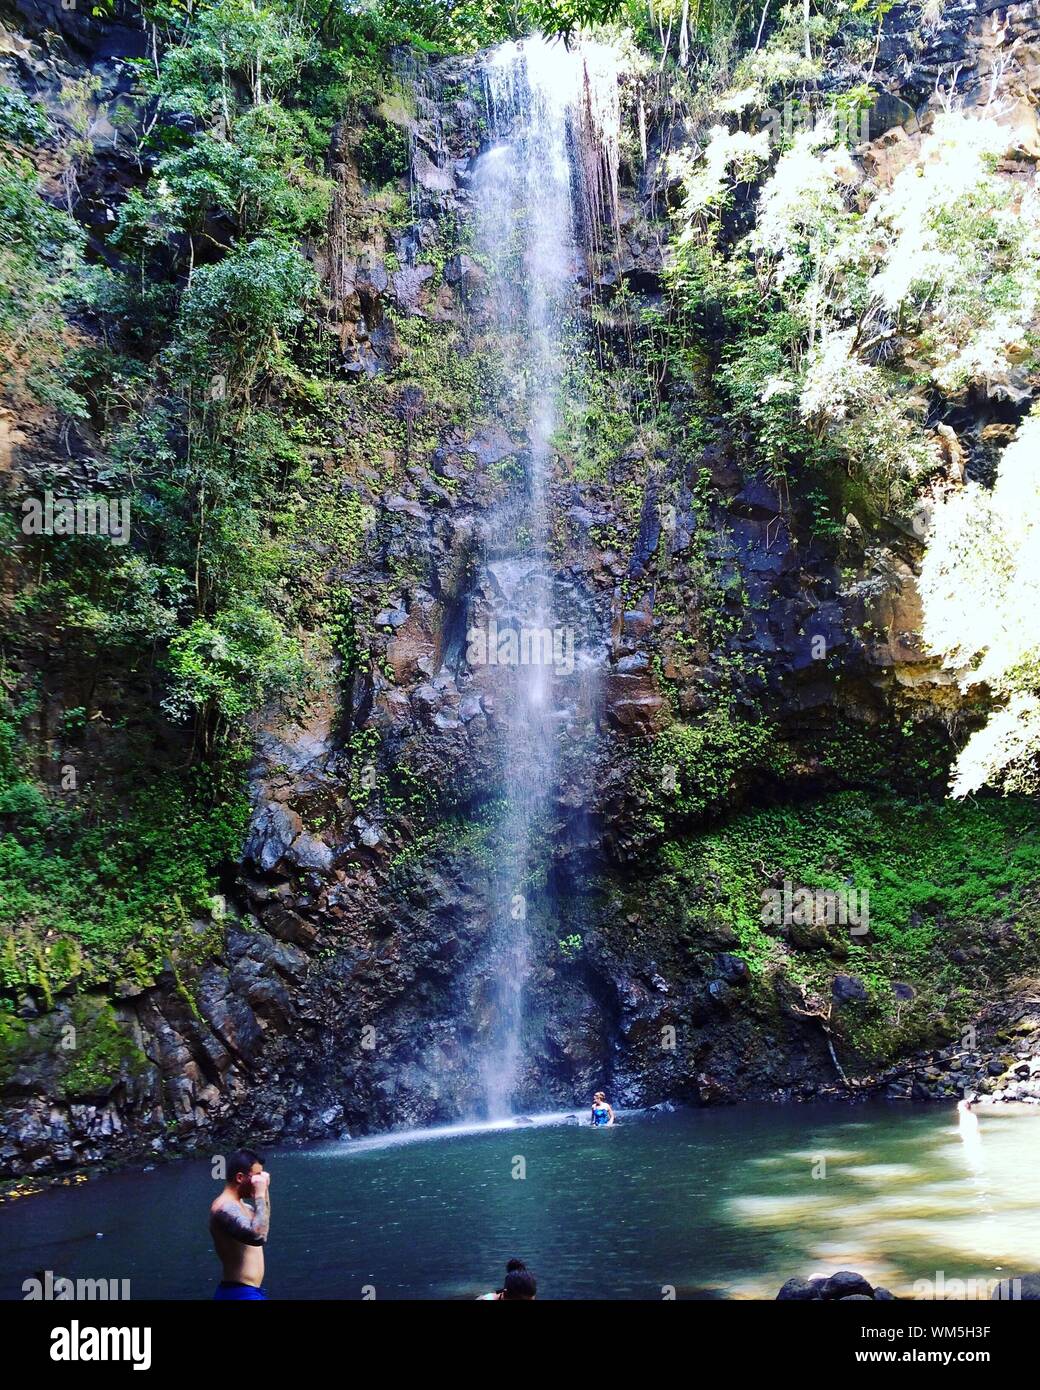 People Enjoying In Waterfall At Kauai Stock Photo